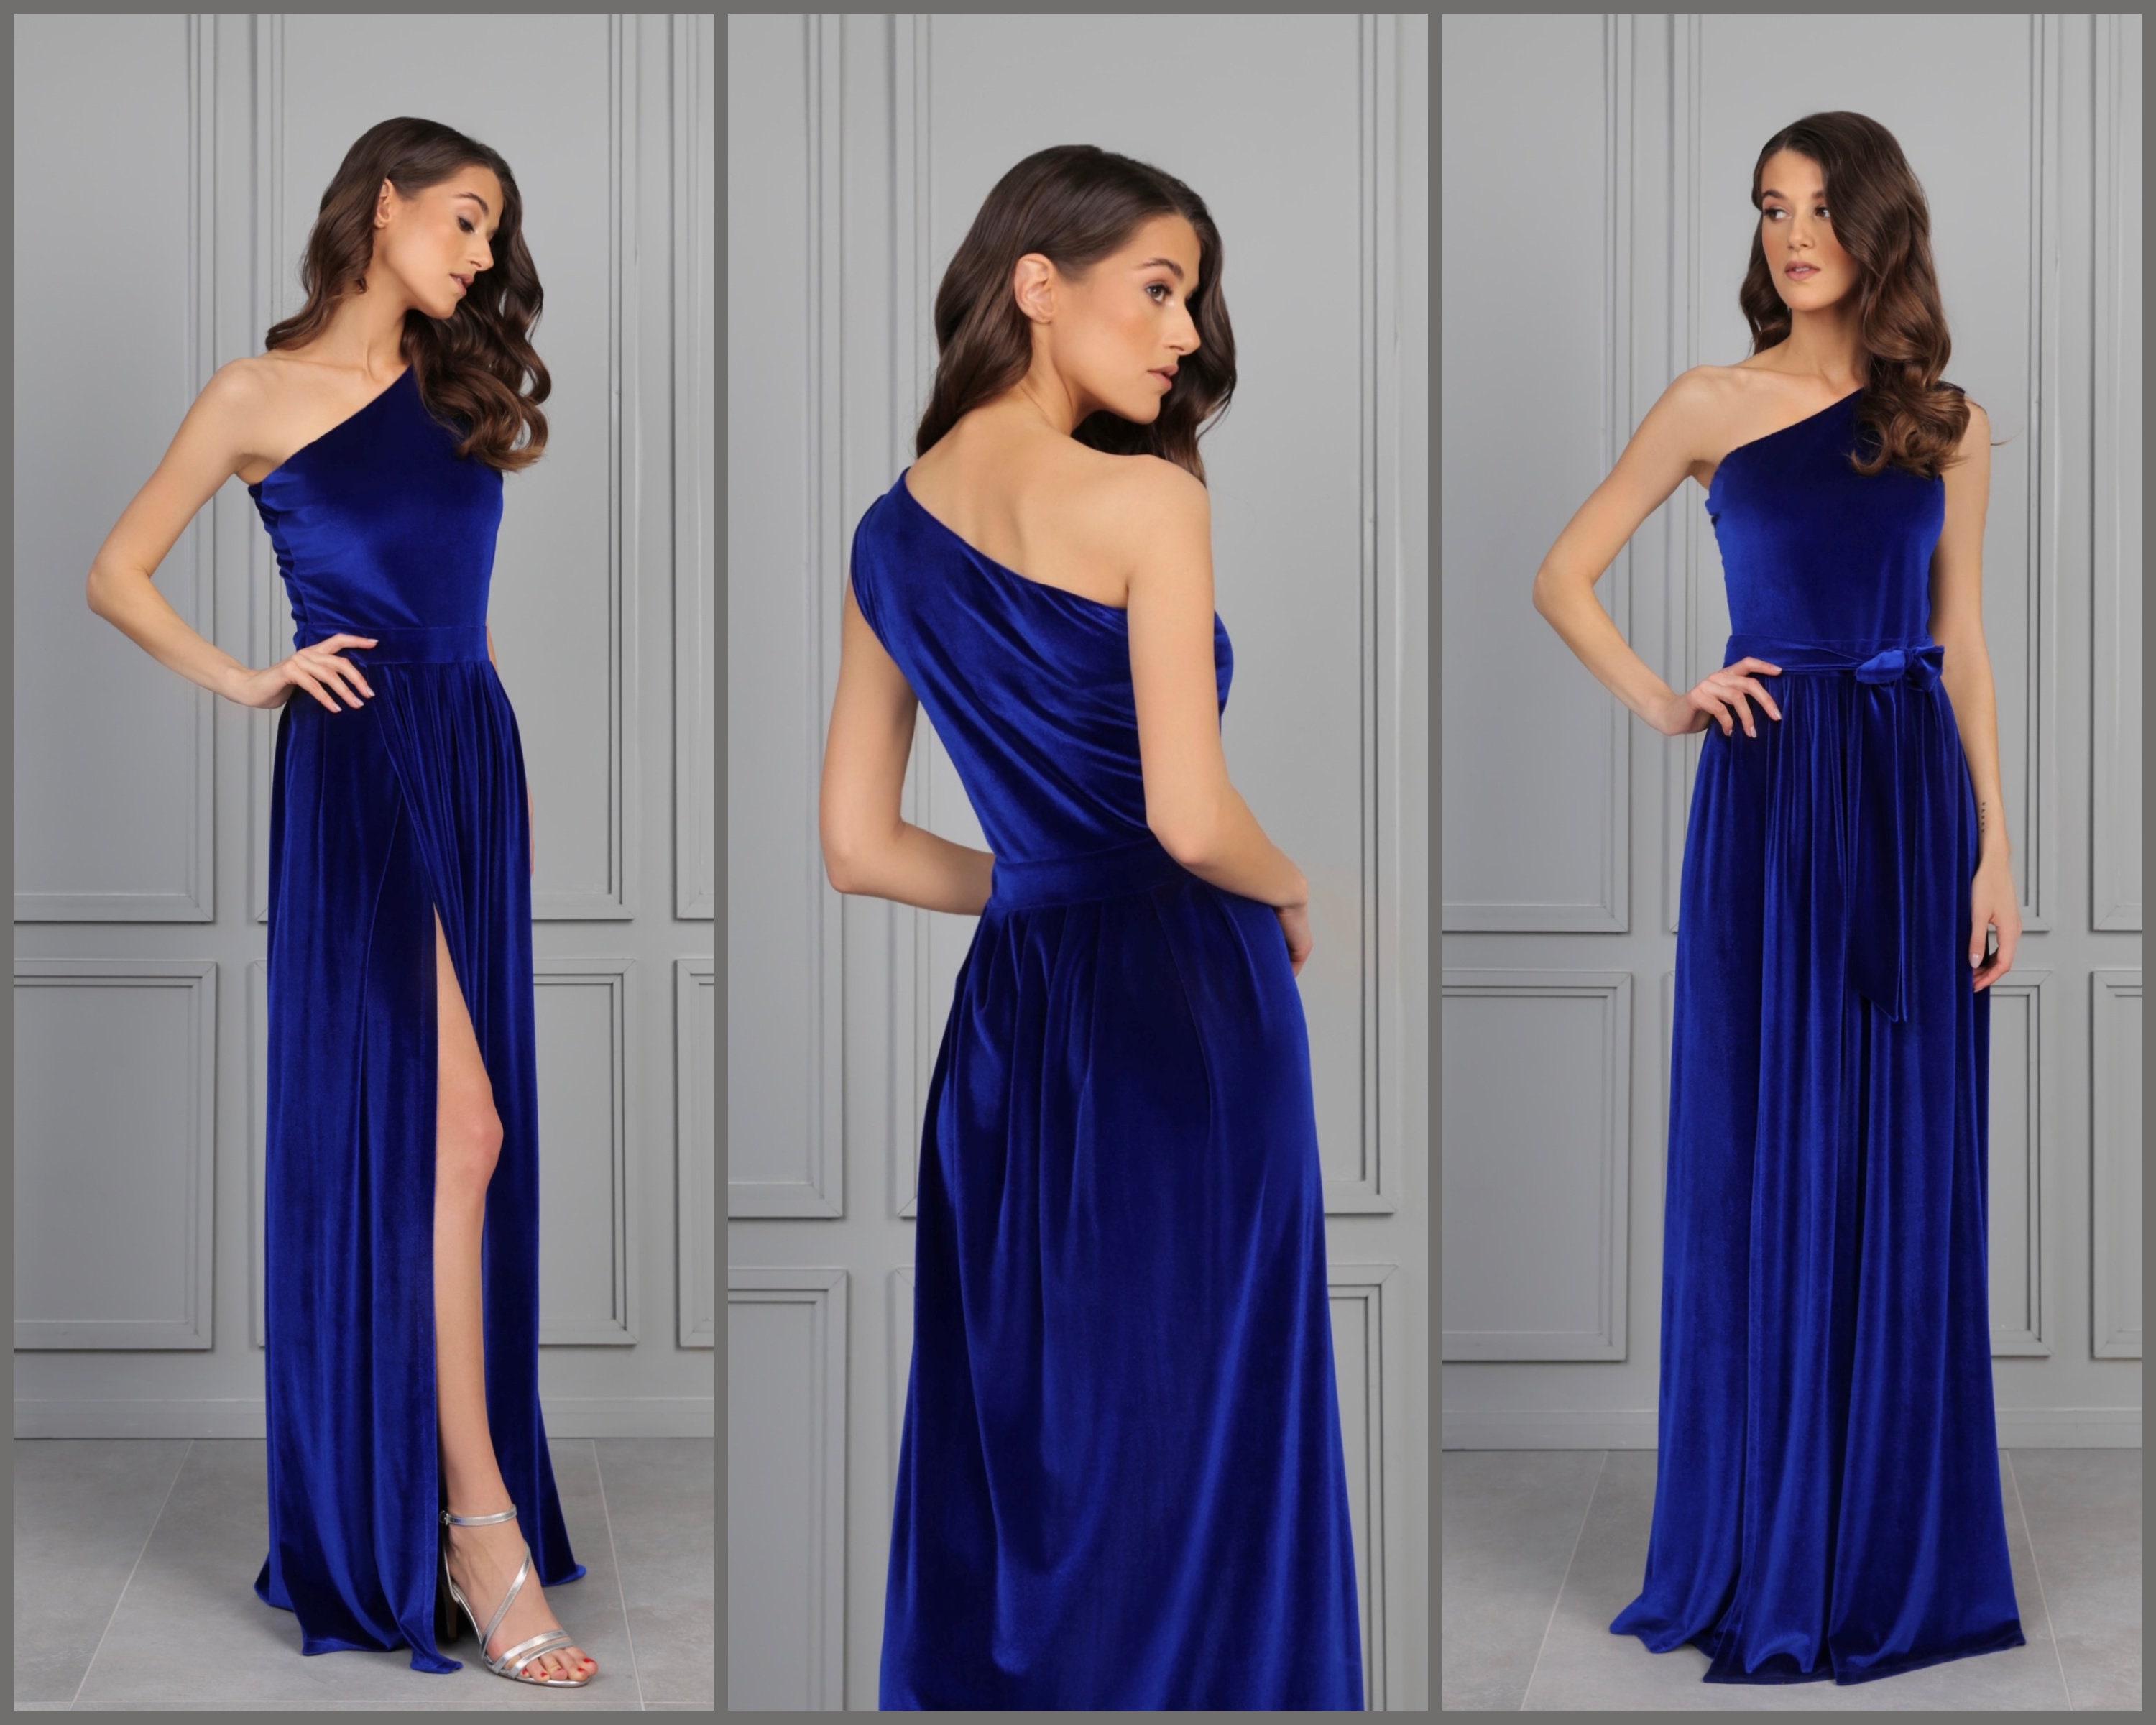 Royal Blue Pure Silk Velvet Fabric, Luxury Silk Velvet Fabric for Skirt,  Dress, High End Garment, By the Yard 45'' Width